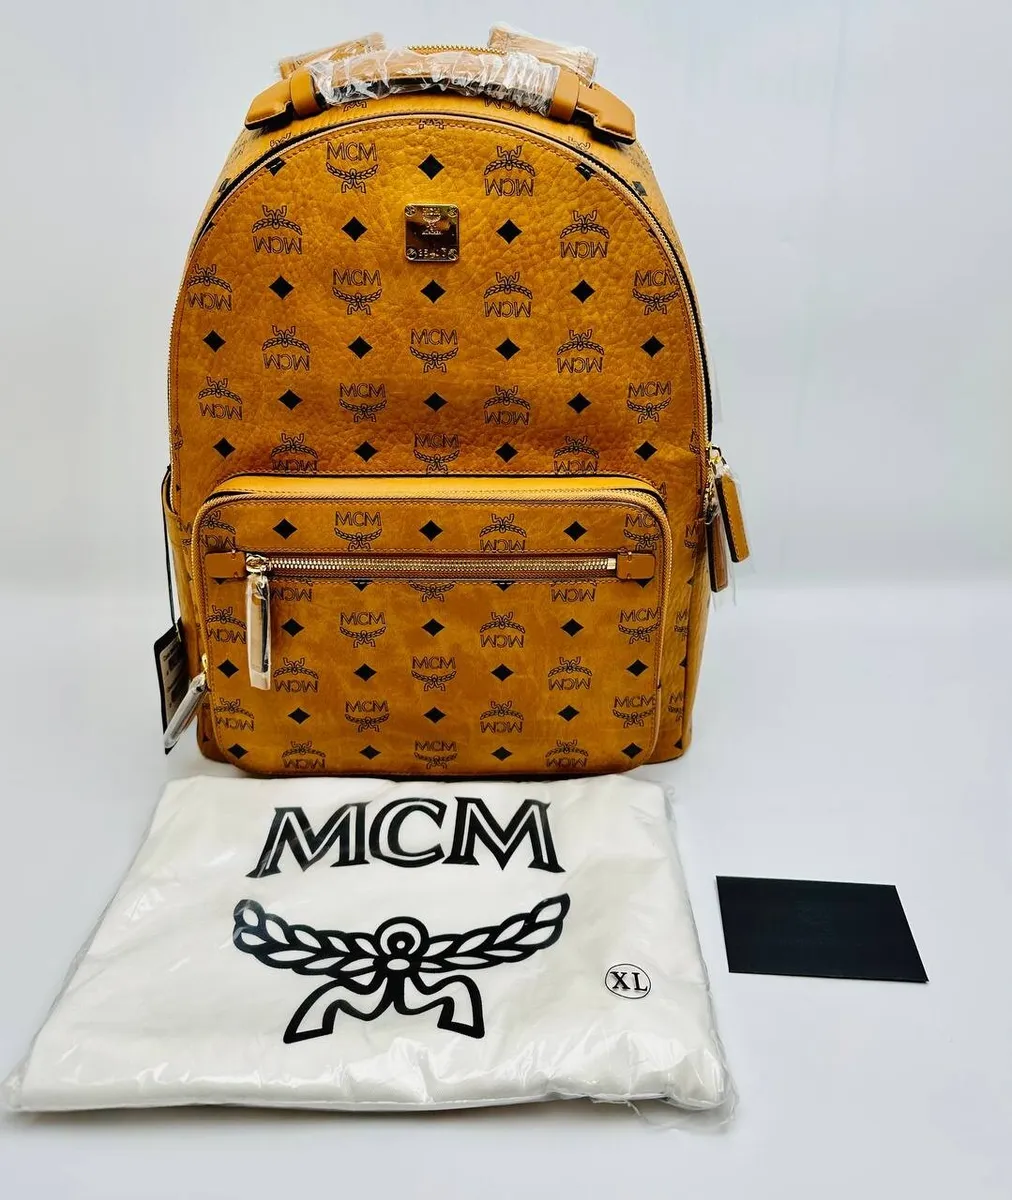 MCM Backpack STARK BACKPACK MMKAAVE07 COGNAC CO